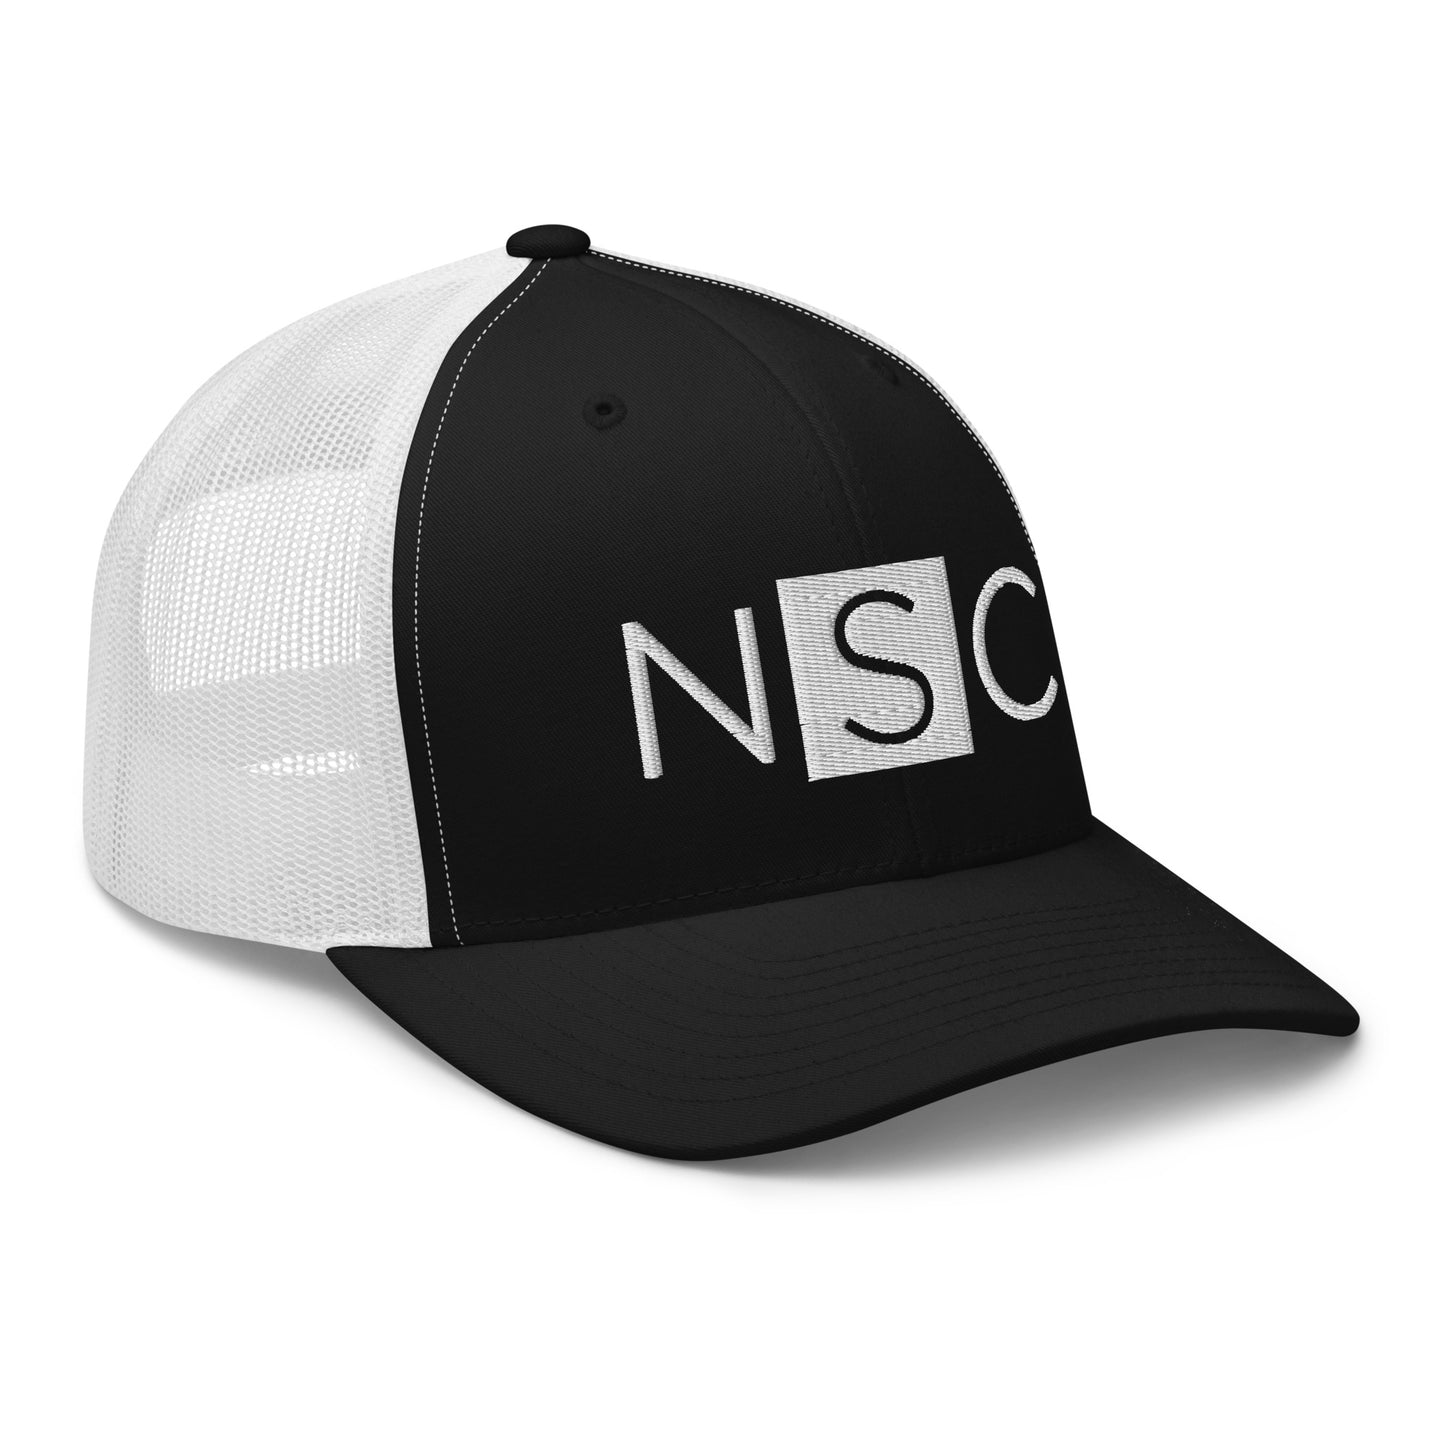 Nashville Sampling Co (NSC) Embroidered Trucker Cap